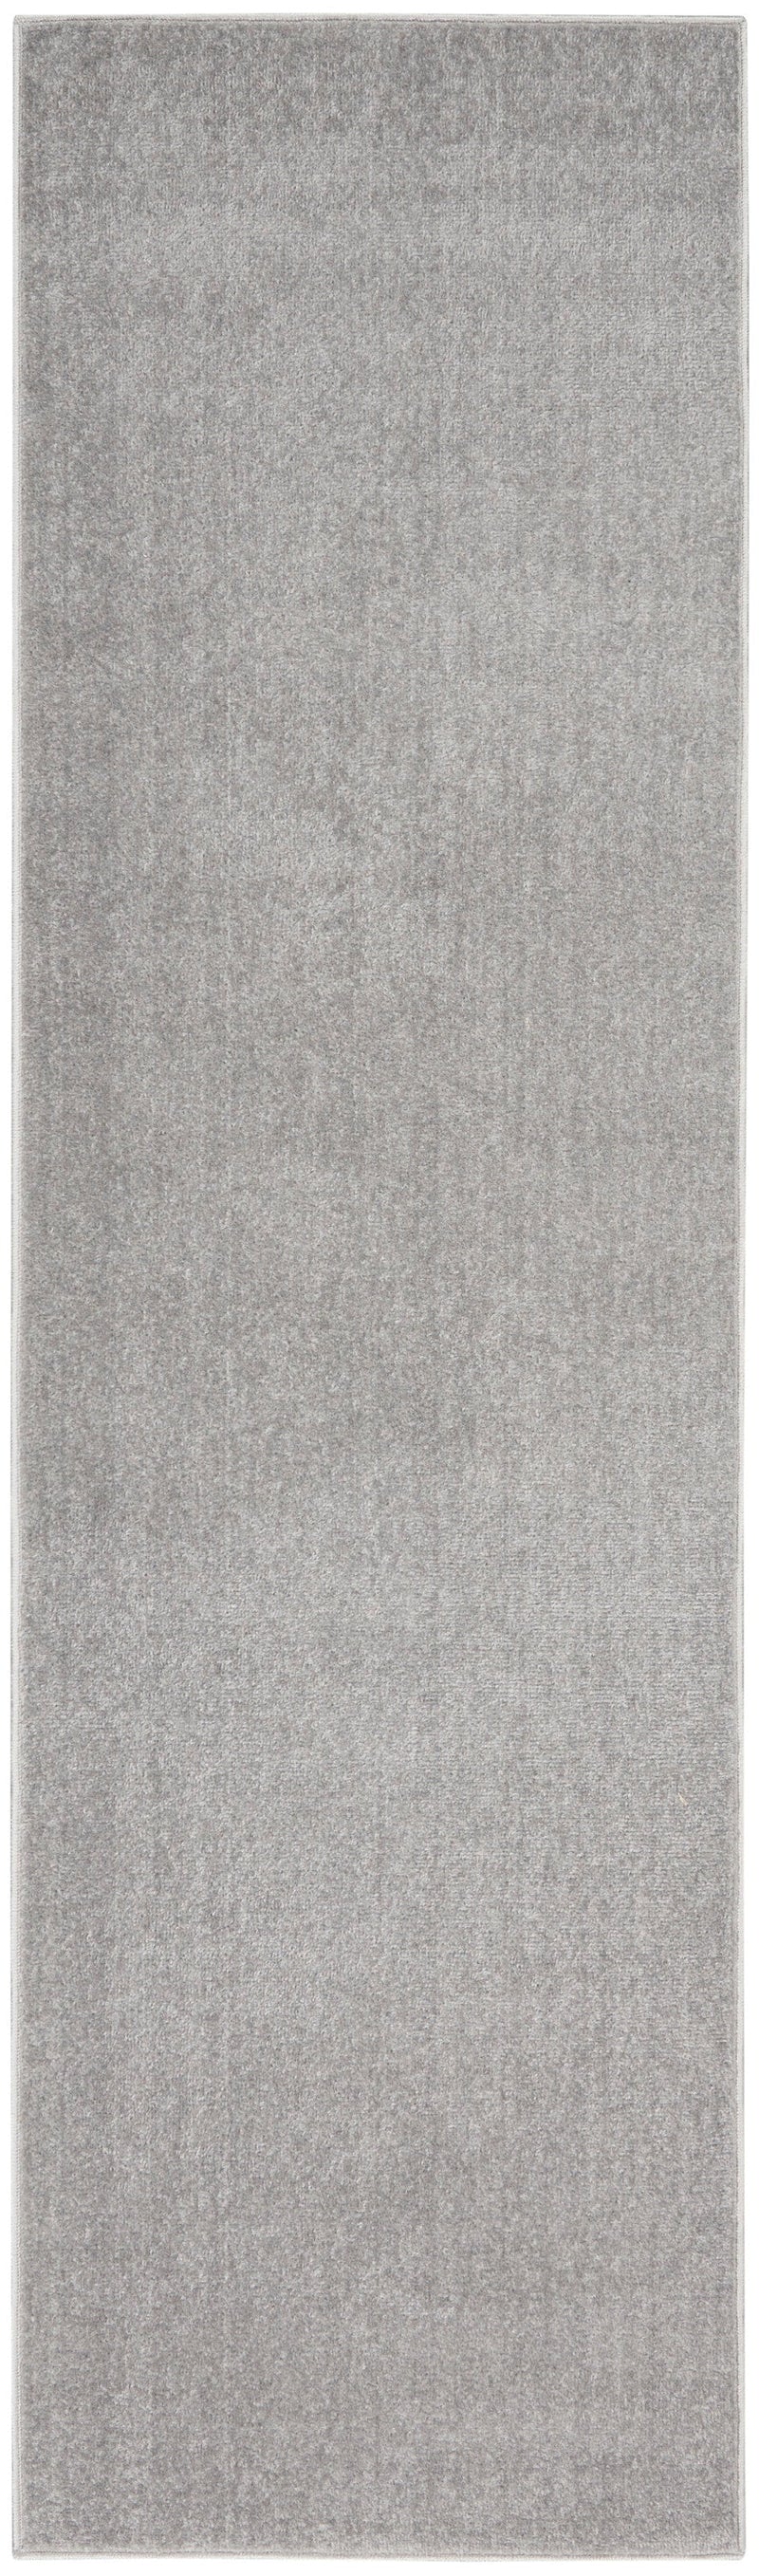 media image for nourison essentials silver grey rug by nourison 99446062369 redo 4 255